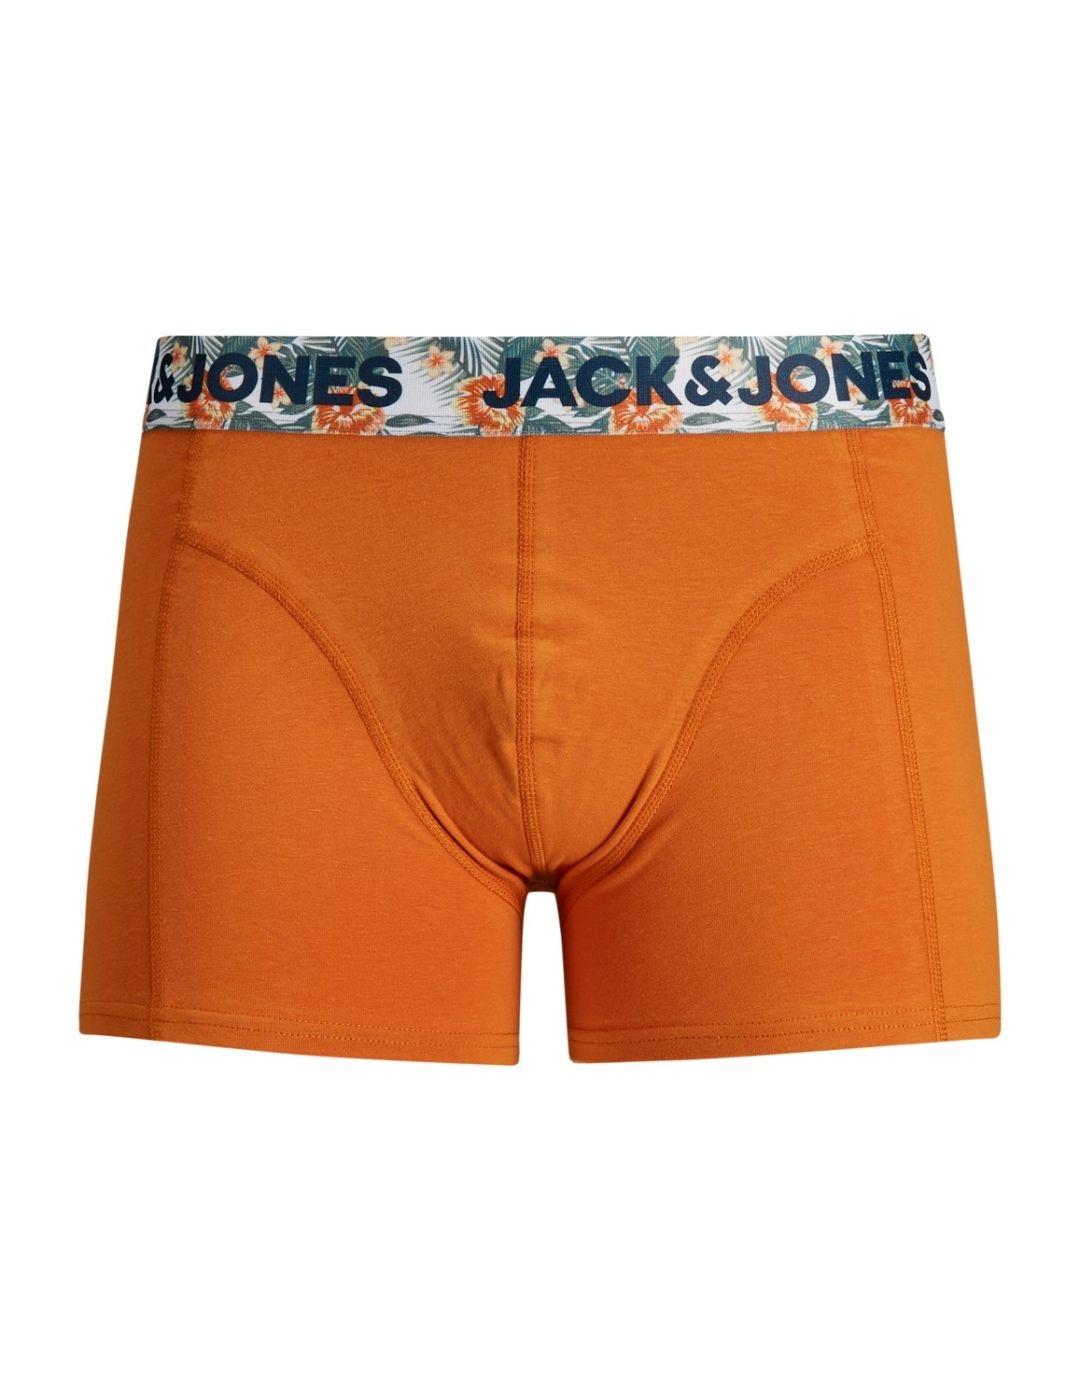 Intimo Jack&Jones pack 3 multicolor para hombre -a